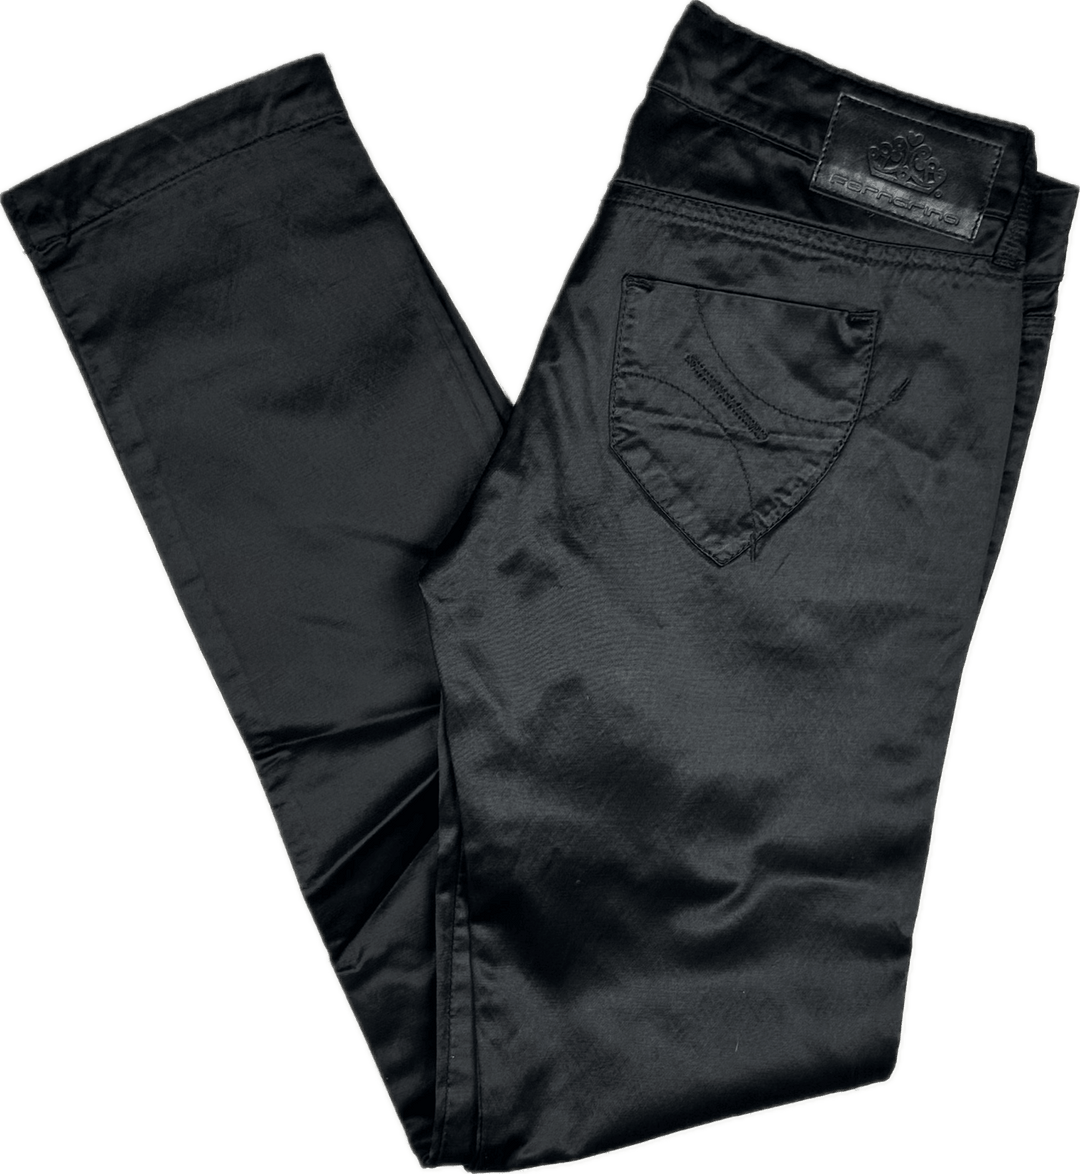 NEW - Fornarina Italian Ladies 'Scarlett' Black Sheen Jeans -Size 29 - Jean Pool